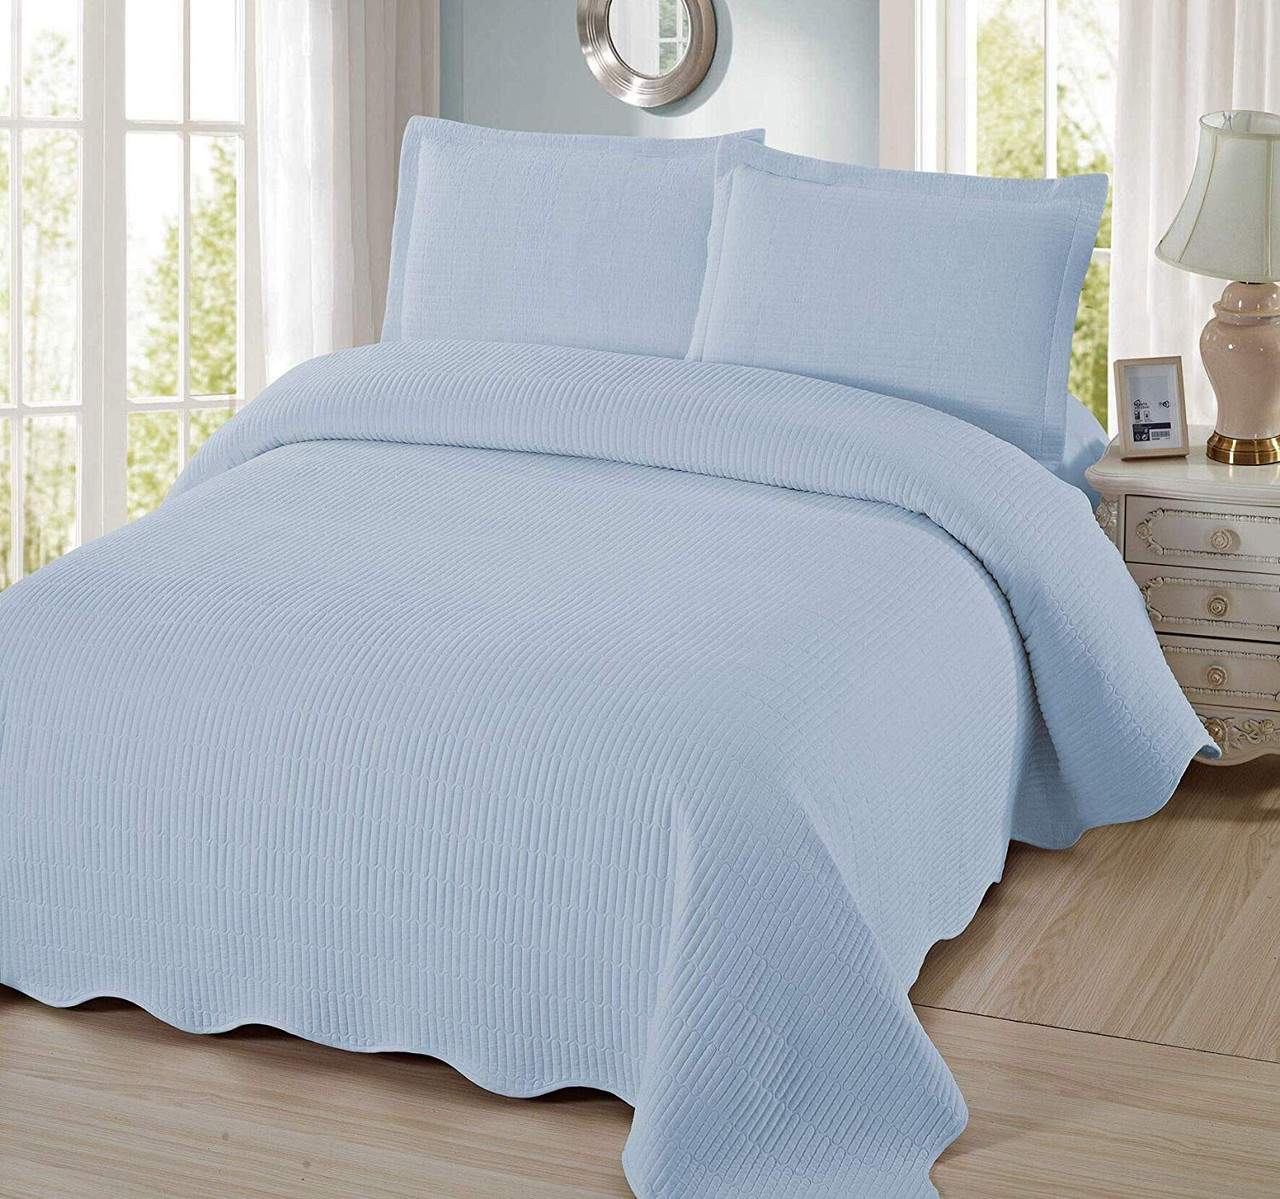 Super soft bed linen